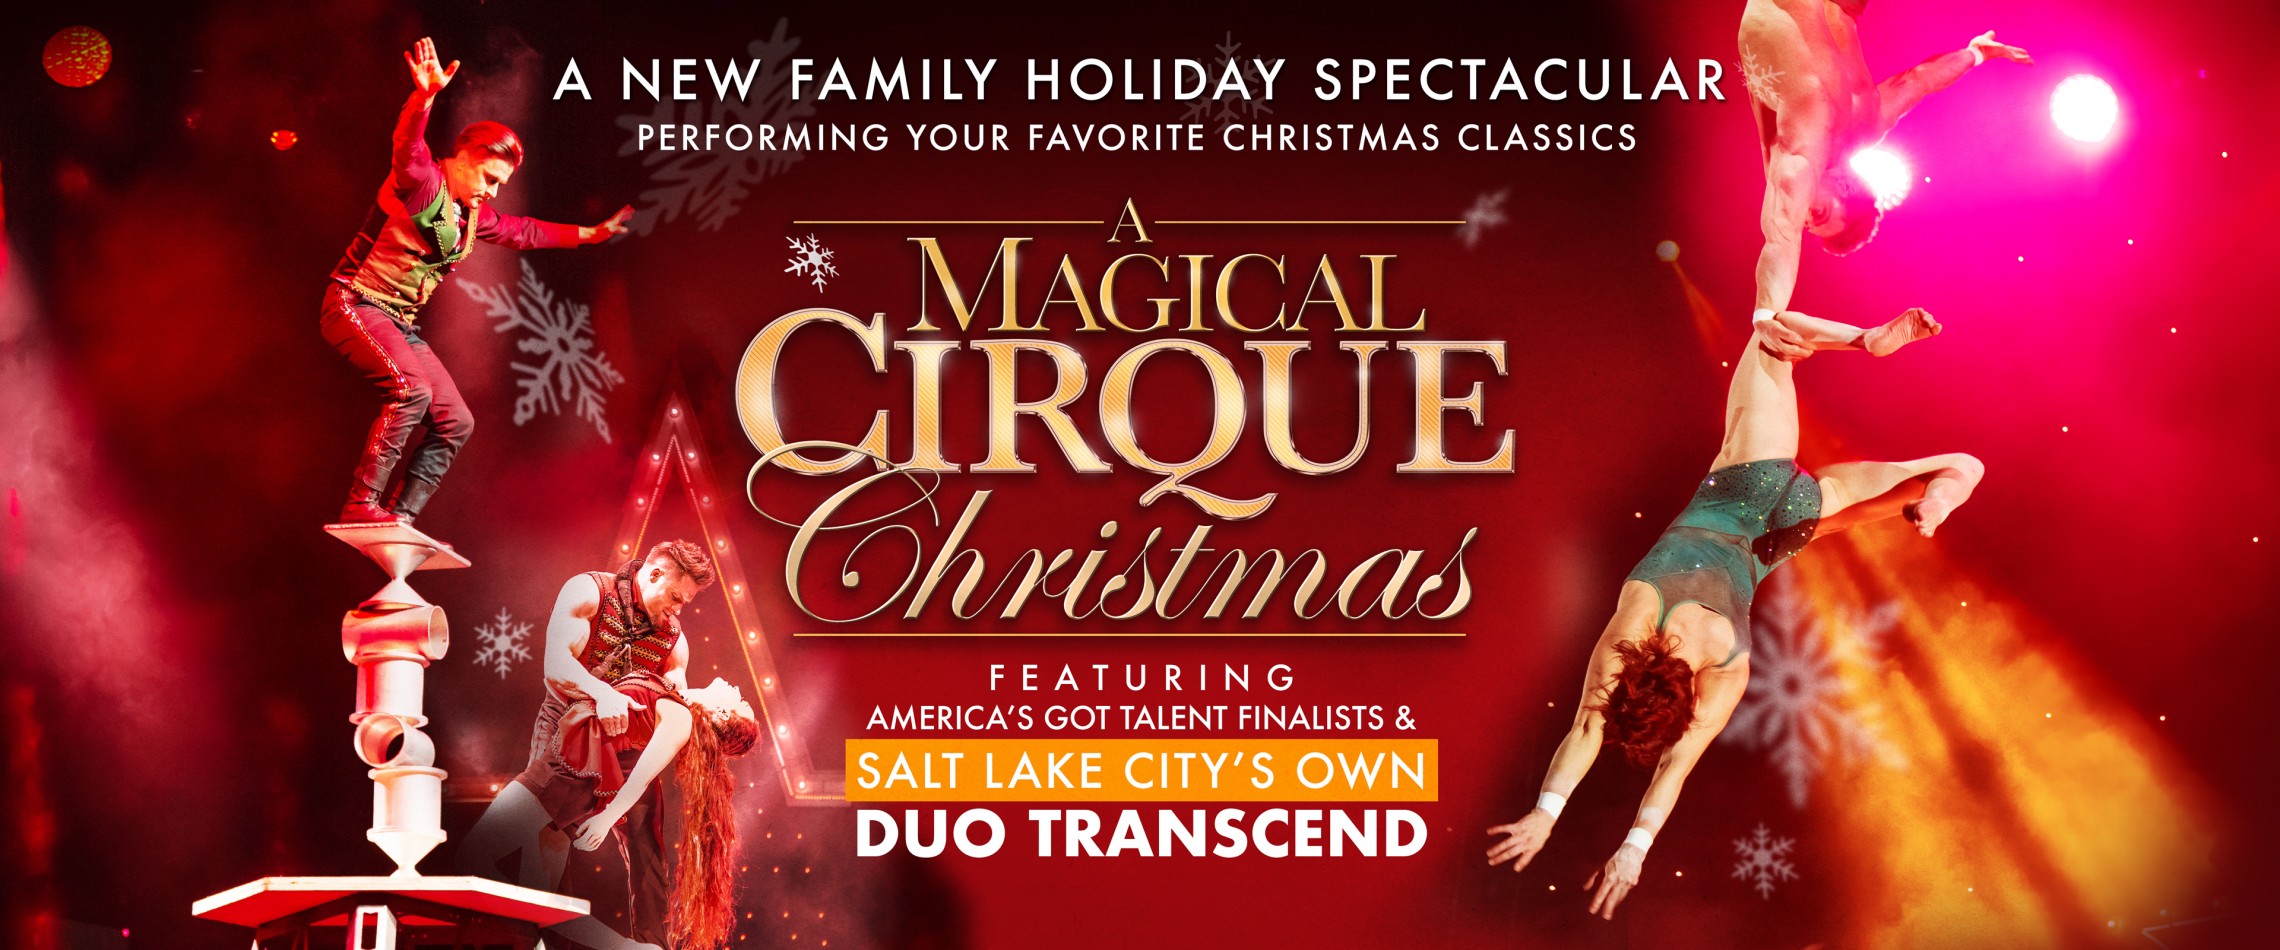 A Magical Cirque Christmas Live at the Eccles